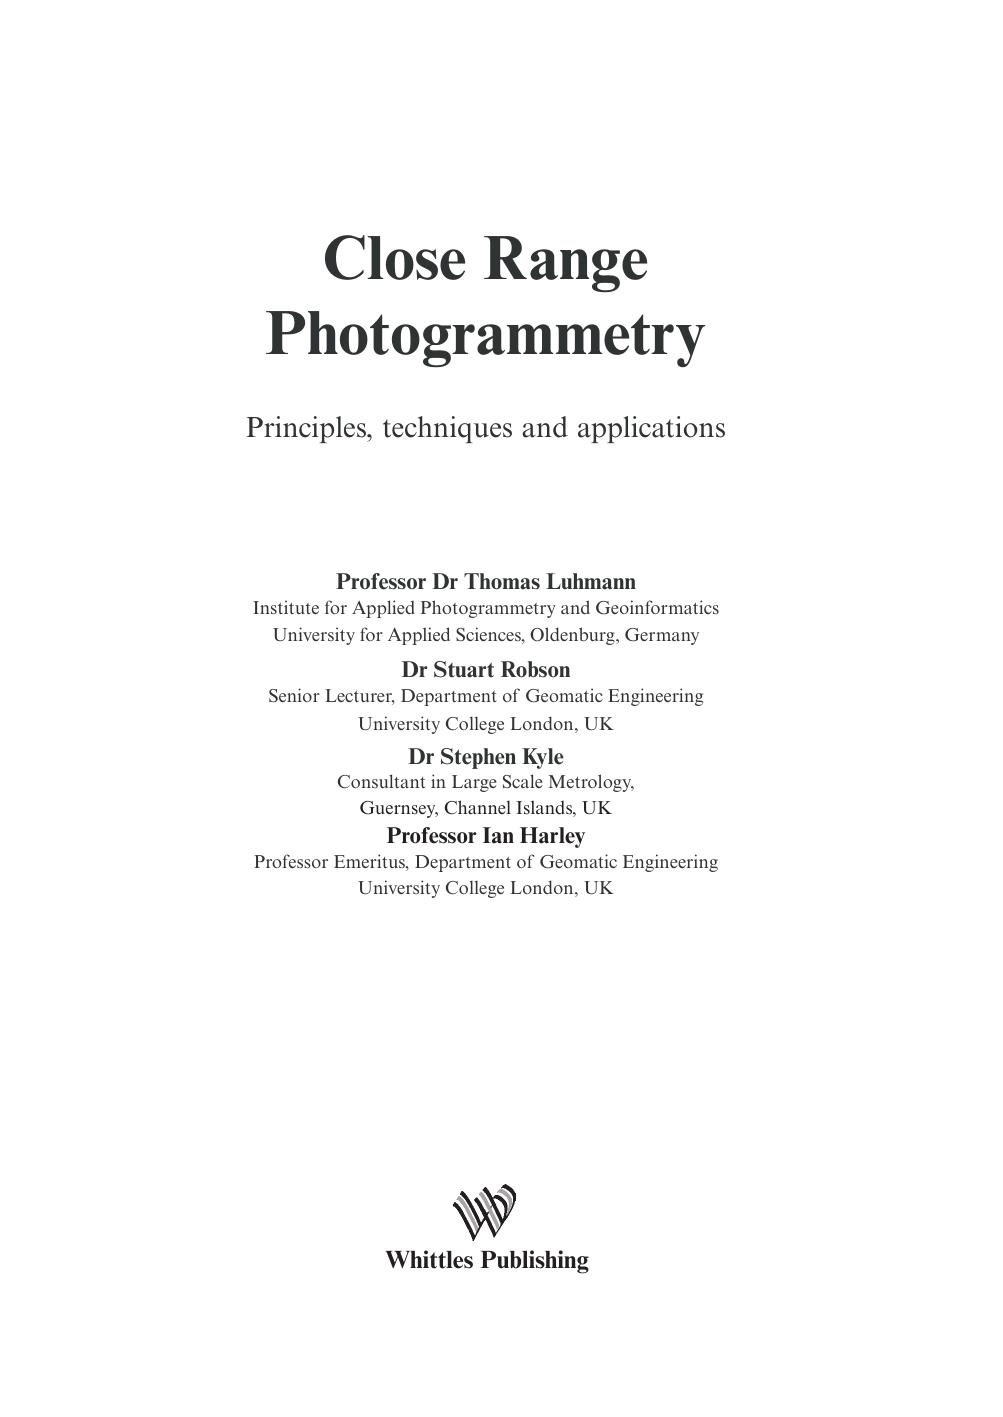 Close Range Photogrammetry : Principles, Techniques and Applications